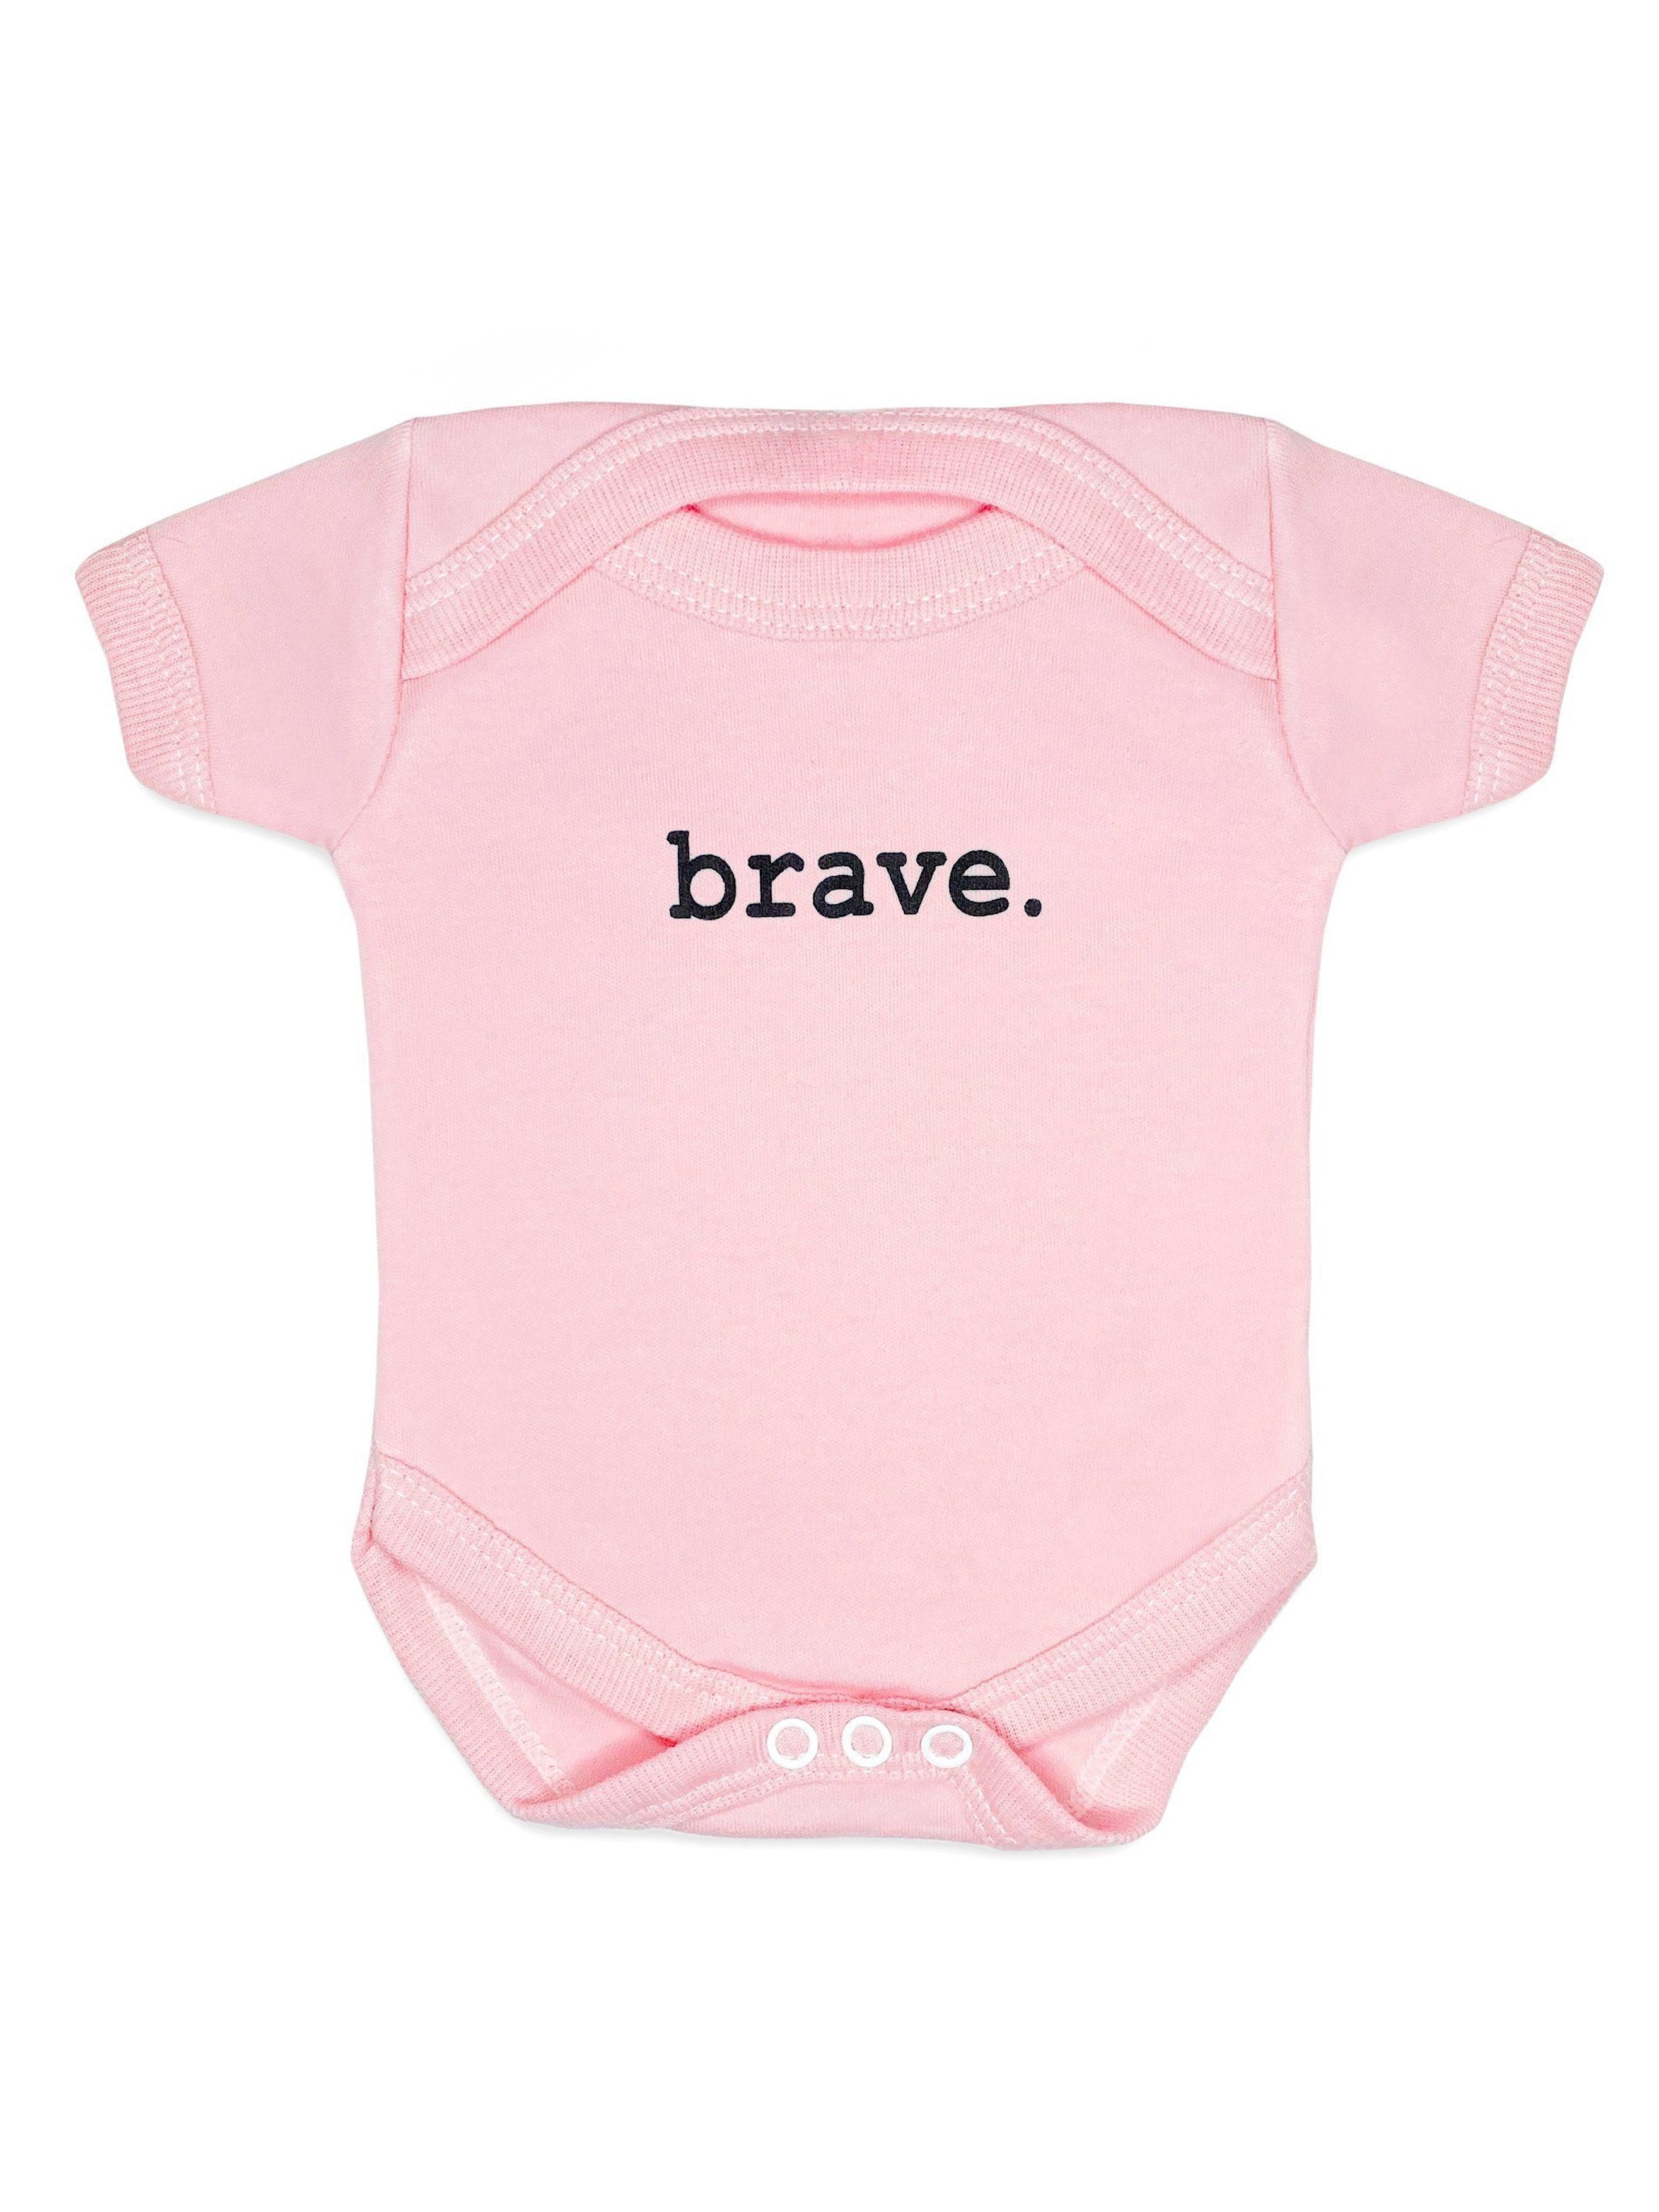 "Brave" Bodysuit - Pink - Bodysuit / Vest - Little Mouse Baby Clothing & Gifts